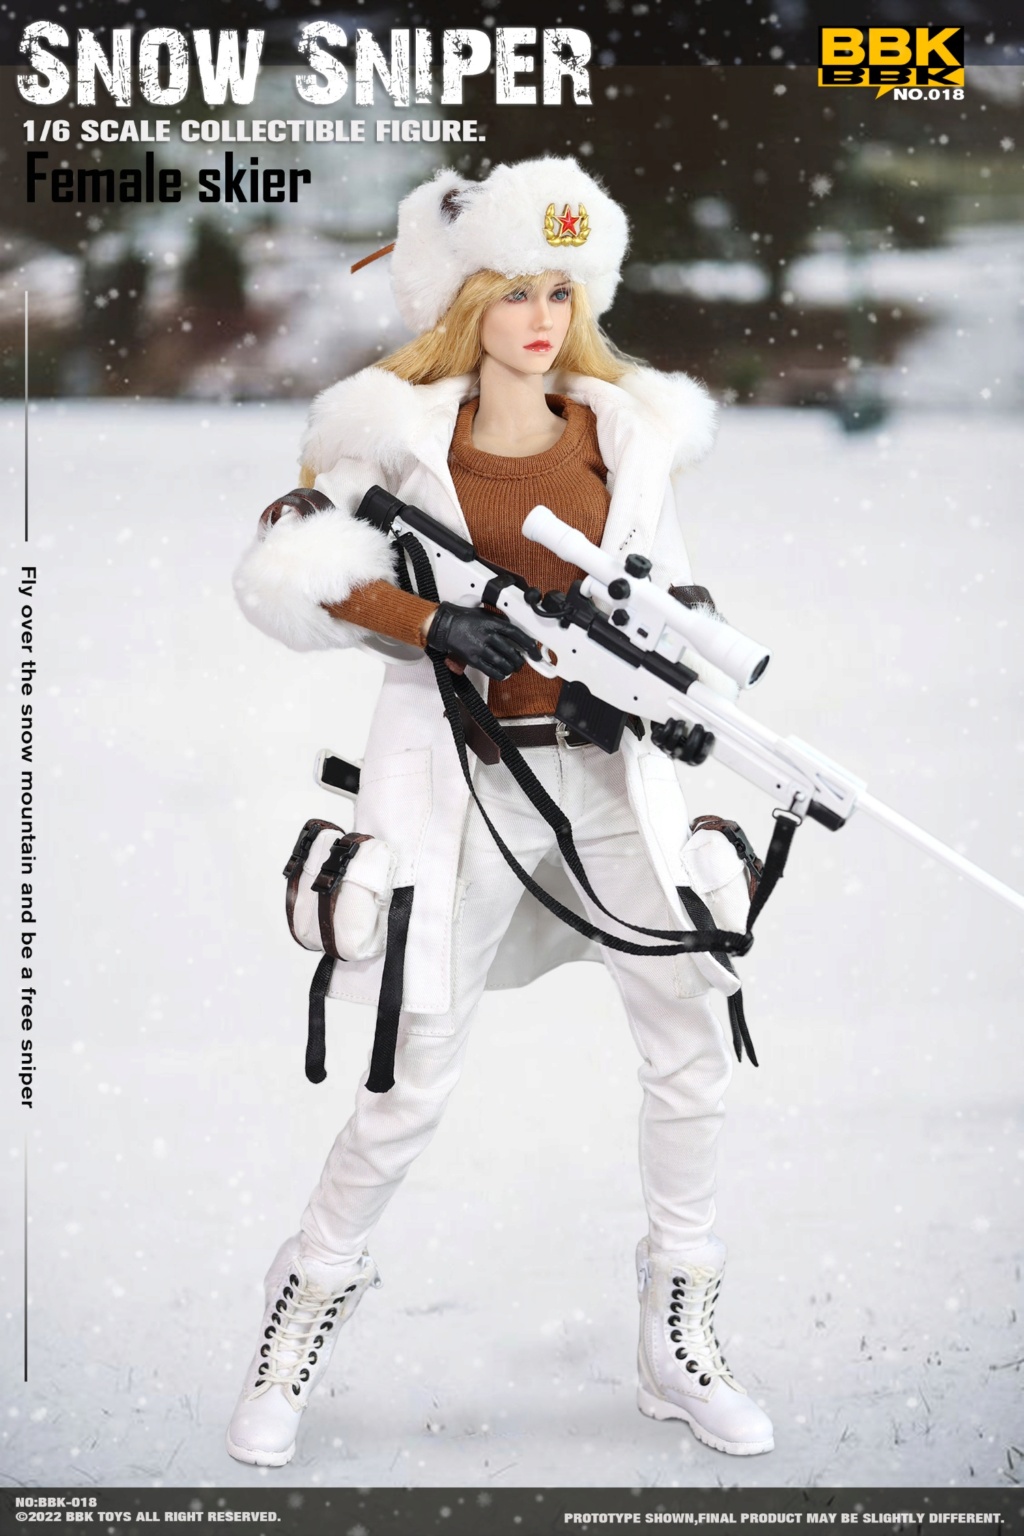 modernmilitary - NEW PRODUCT: BBK: BBK018 1/6 Scale Snow Sniper (Female Skier) 4698bf10